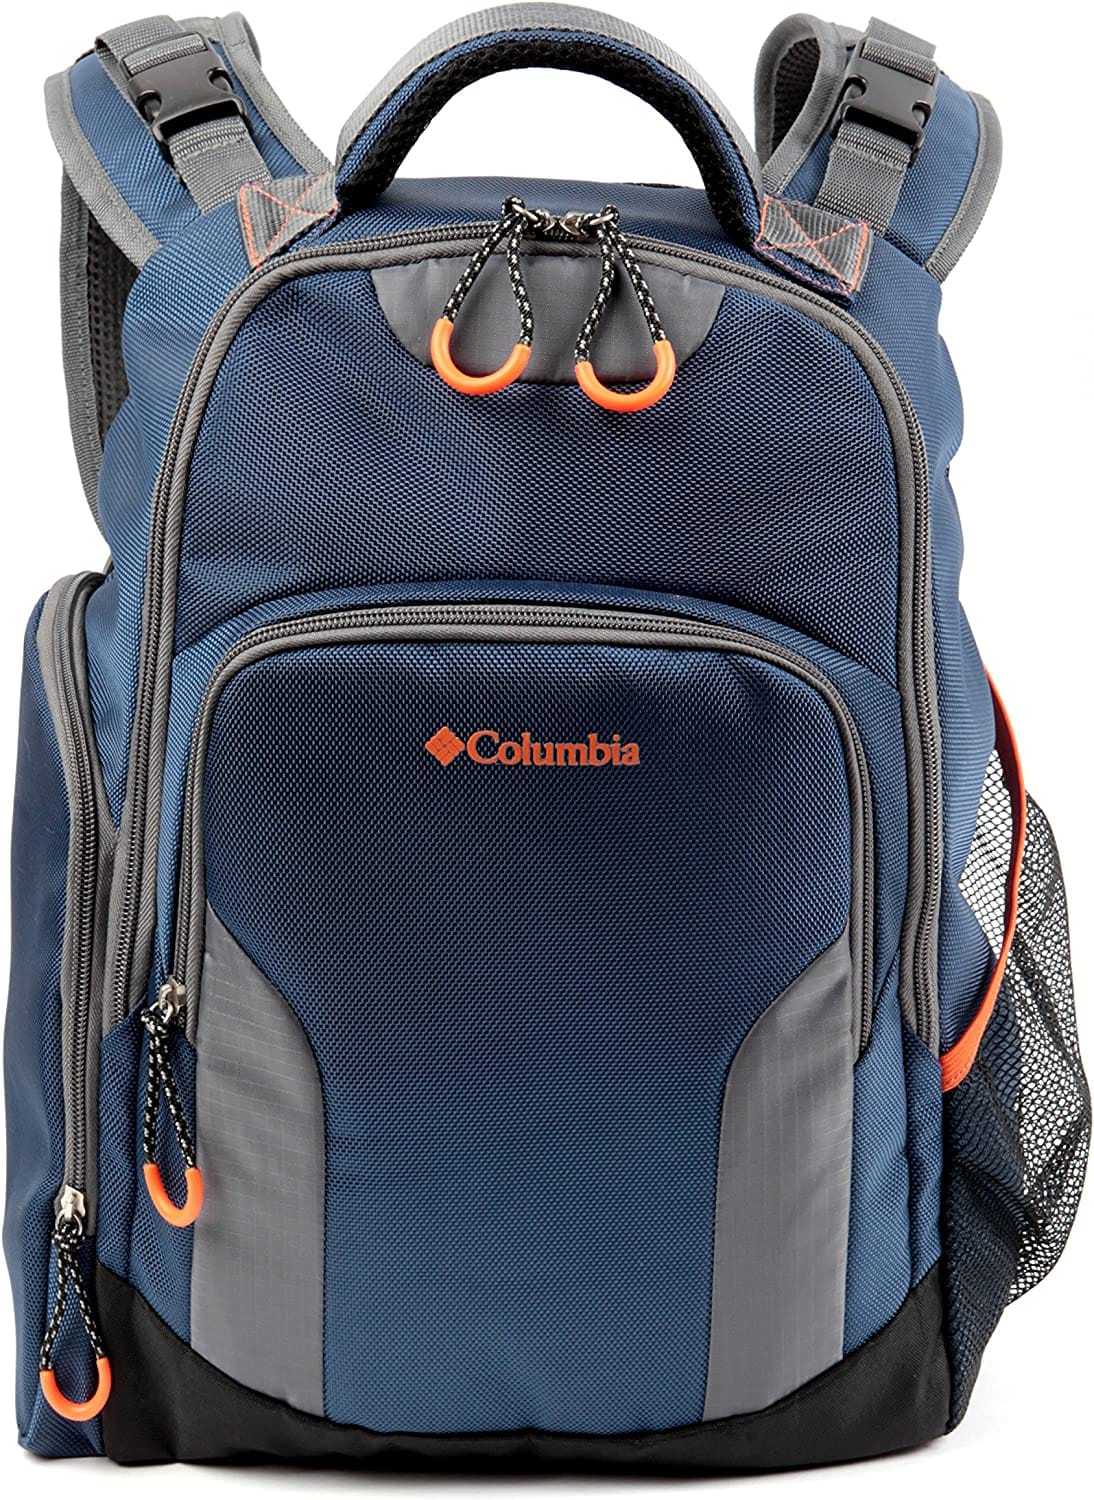 Columbia Summit Rush Backpack Diaper Bag in Navy Blue